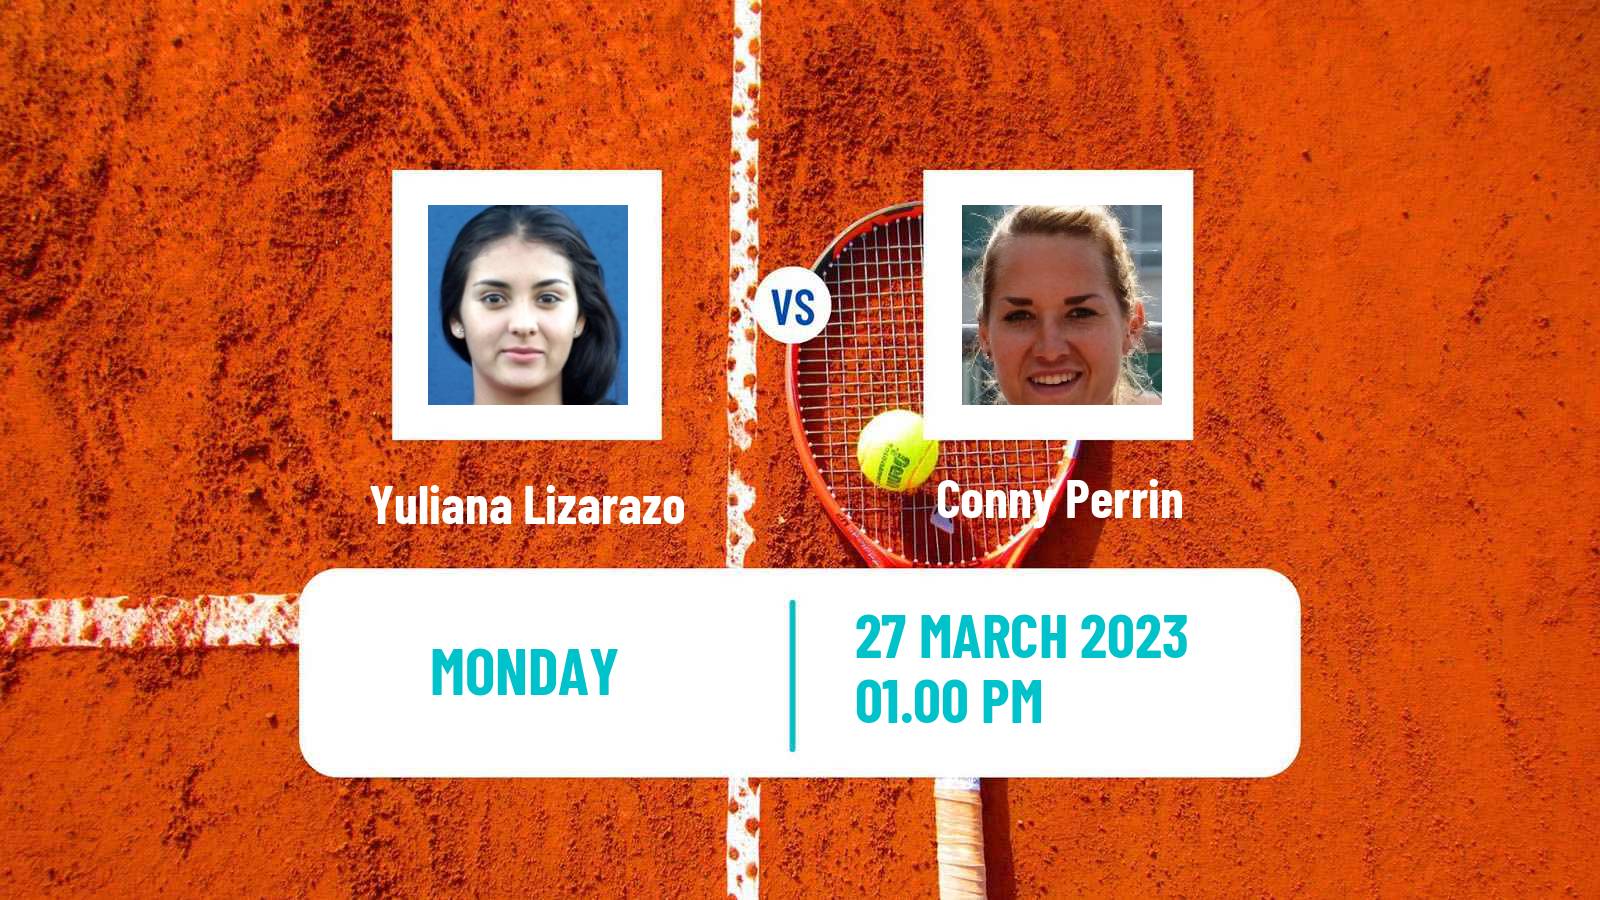 Tennis ATP Challenger Yuliana Lizarazo - Conny Perrin